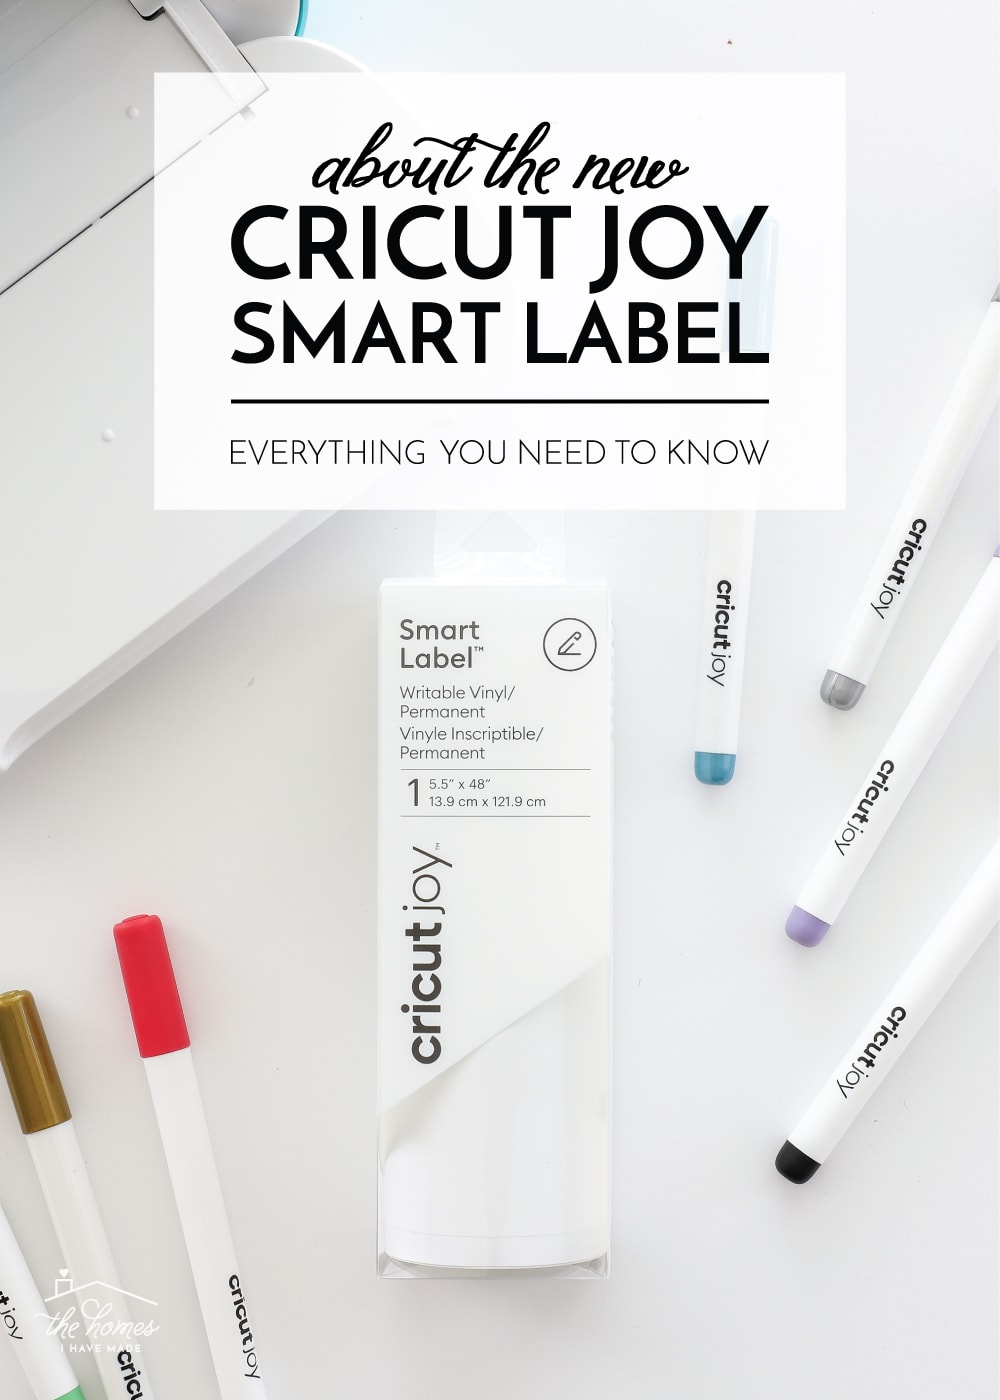 Boxed Cricut Joy Smart Label and Cricut pens